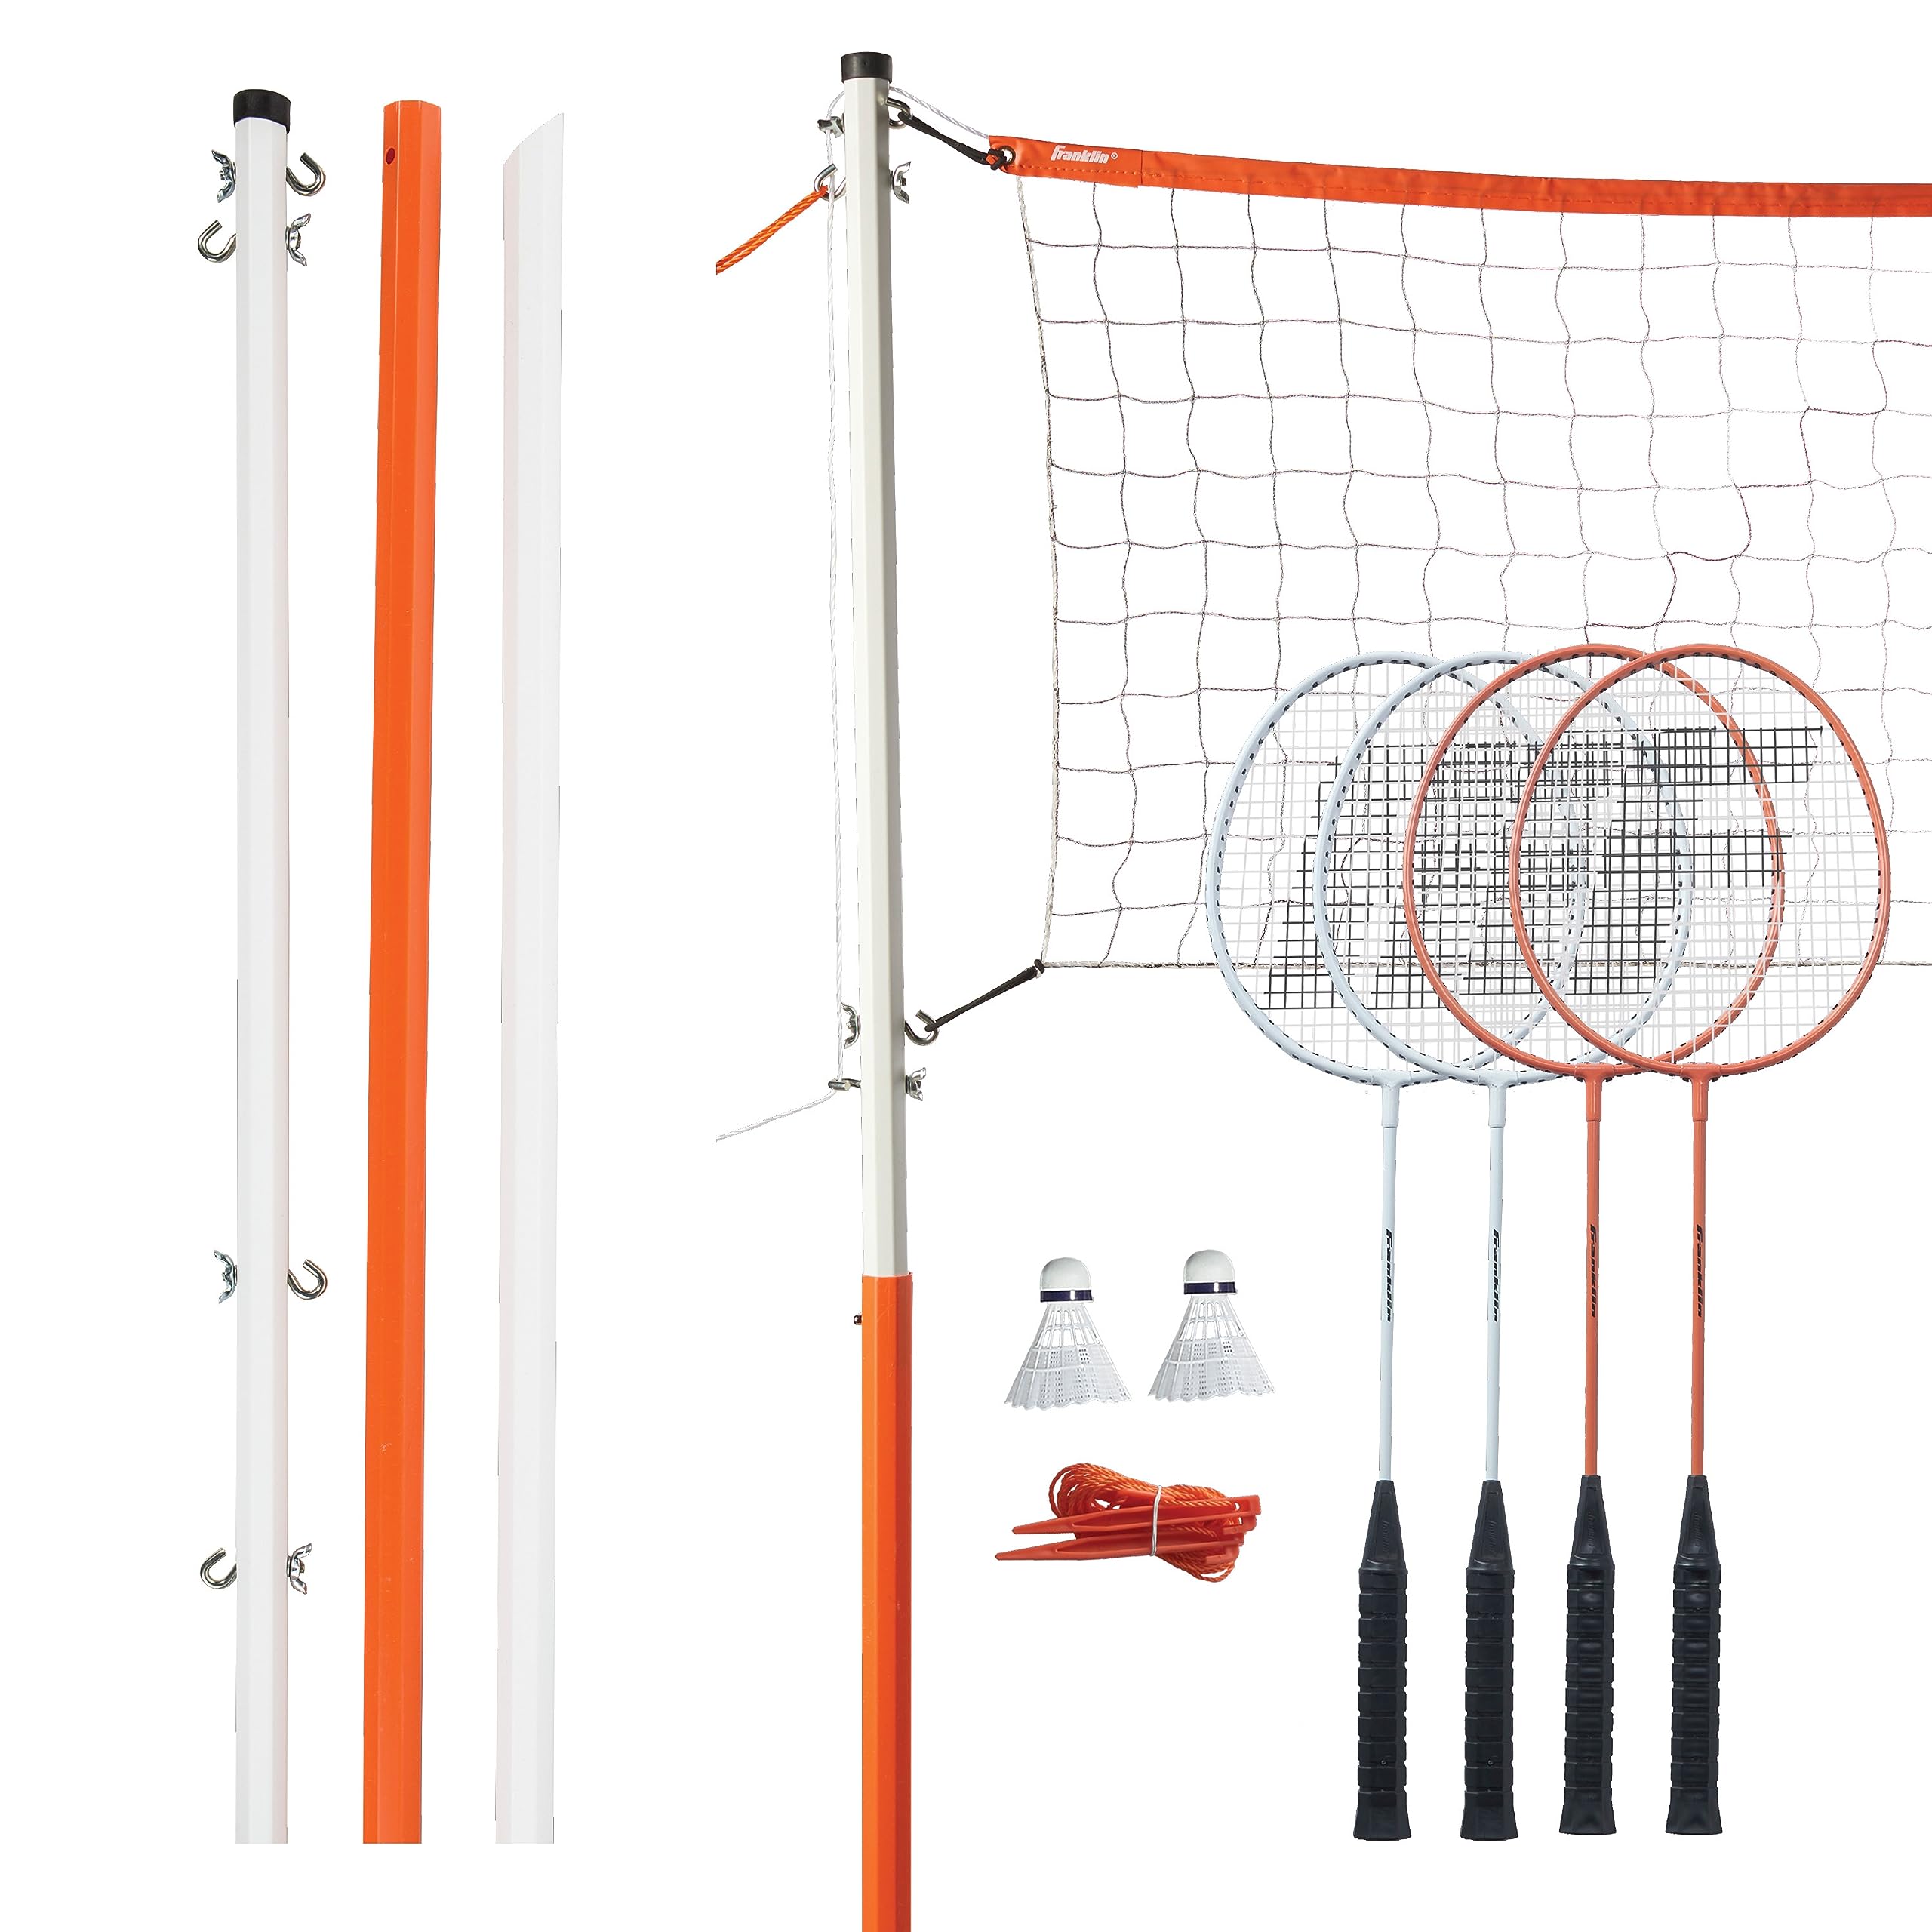 Franklin Sports Badminton Net Sets - Outdoor Backyard + Beach Badminton Net + Equipment Set - (4) Rackets + (2) Birdies + Portable Net Included - Adults + Kids Set